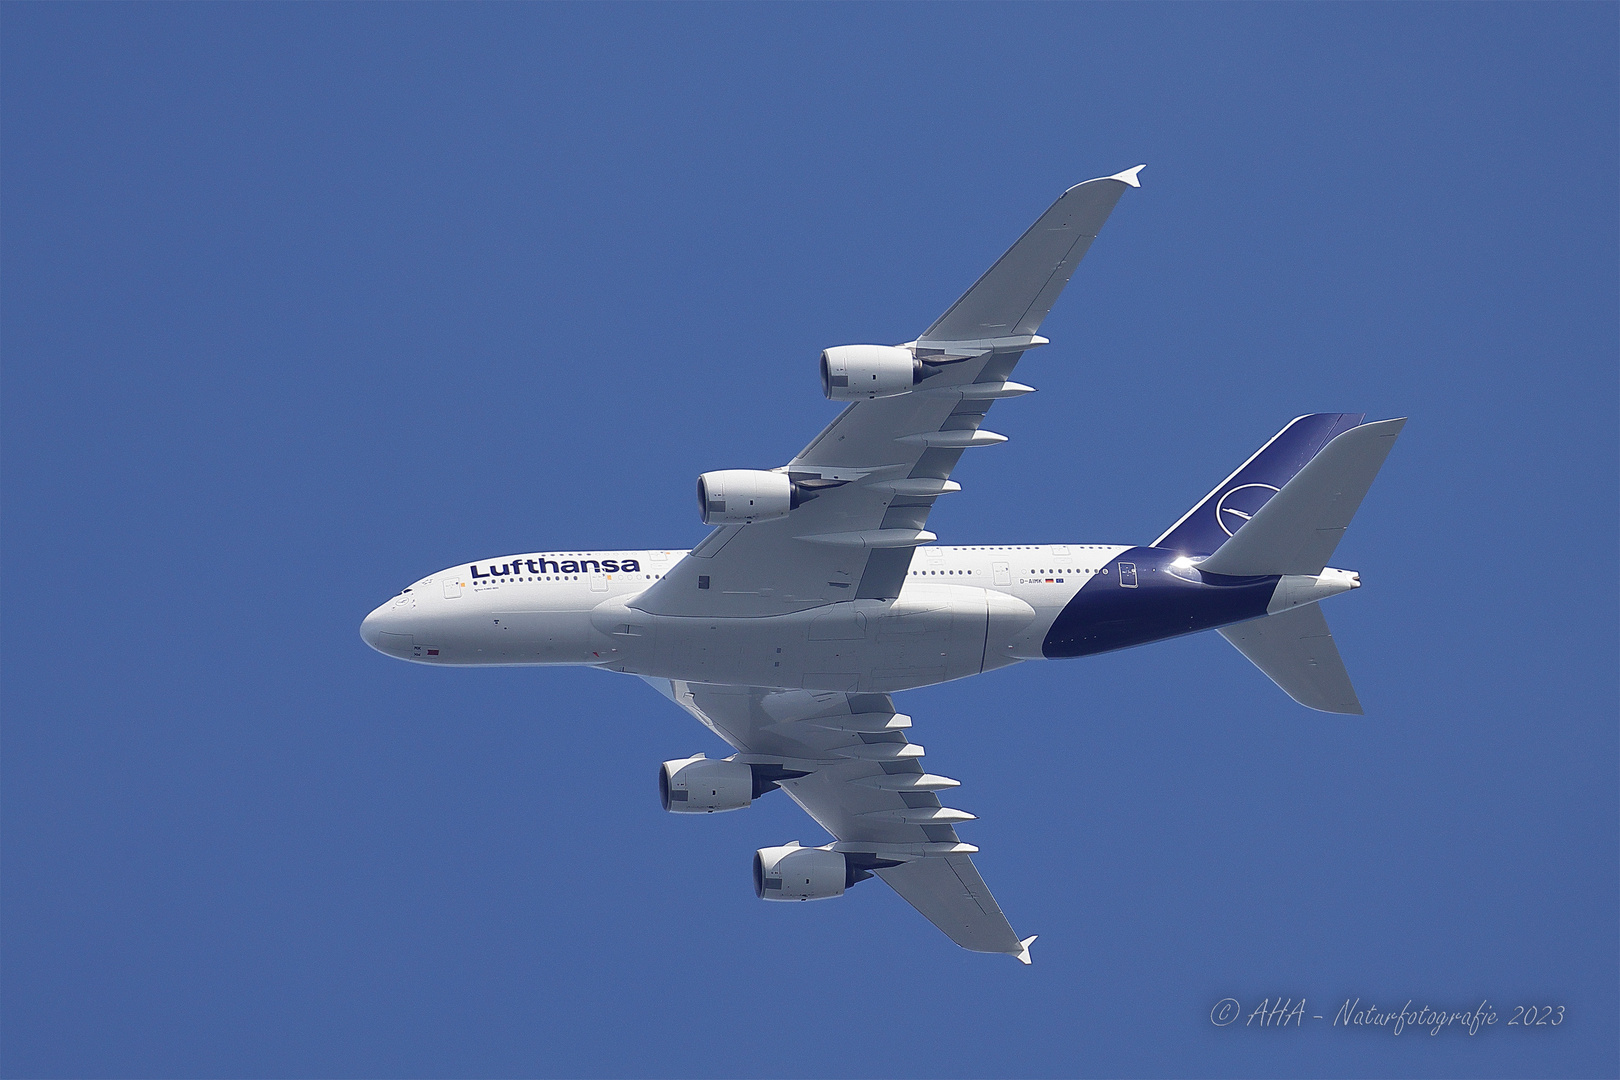  Lufthansa Airbus A380-800 formatfüllend